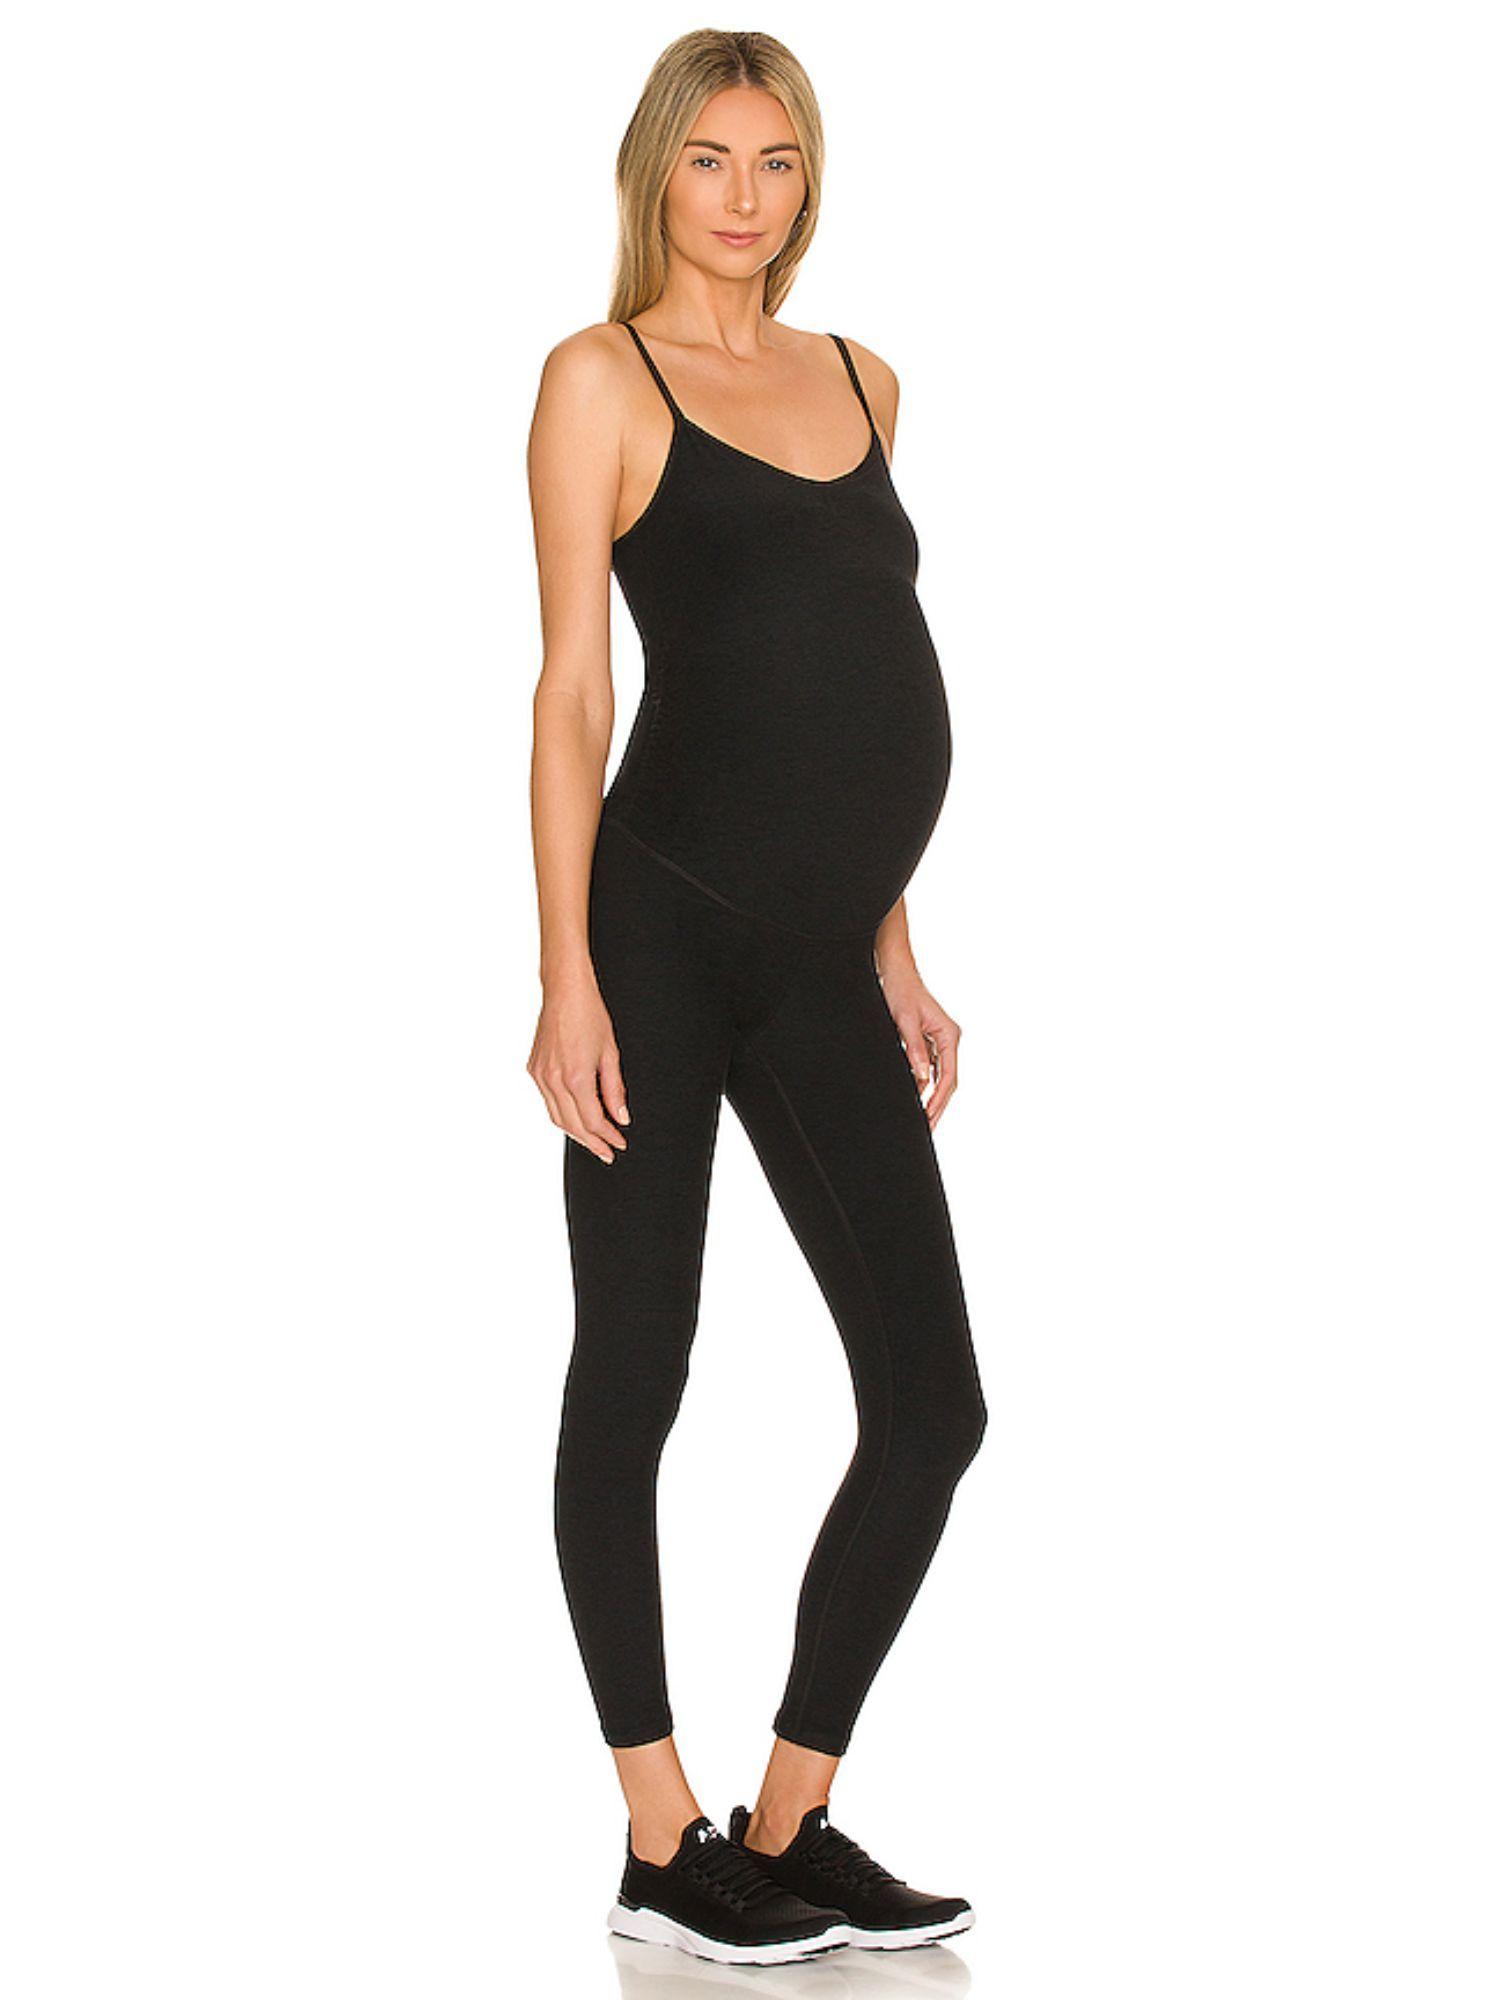 spacedye uplift maternity jumpsuit